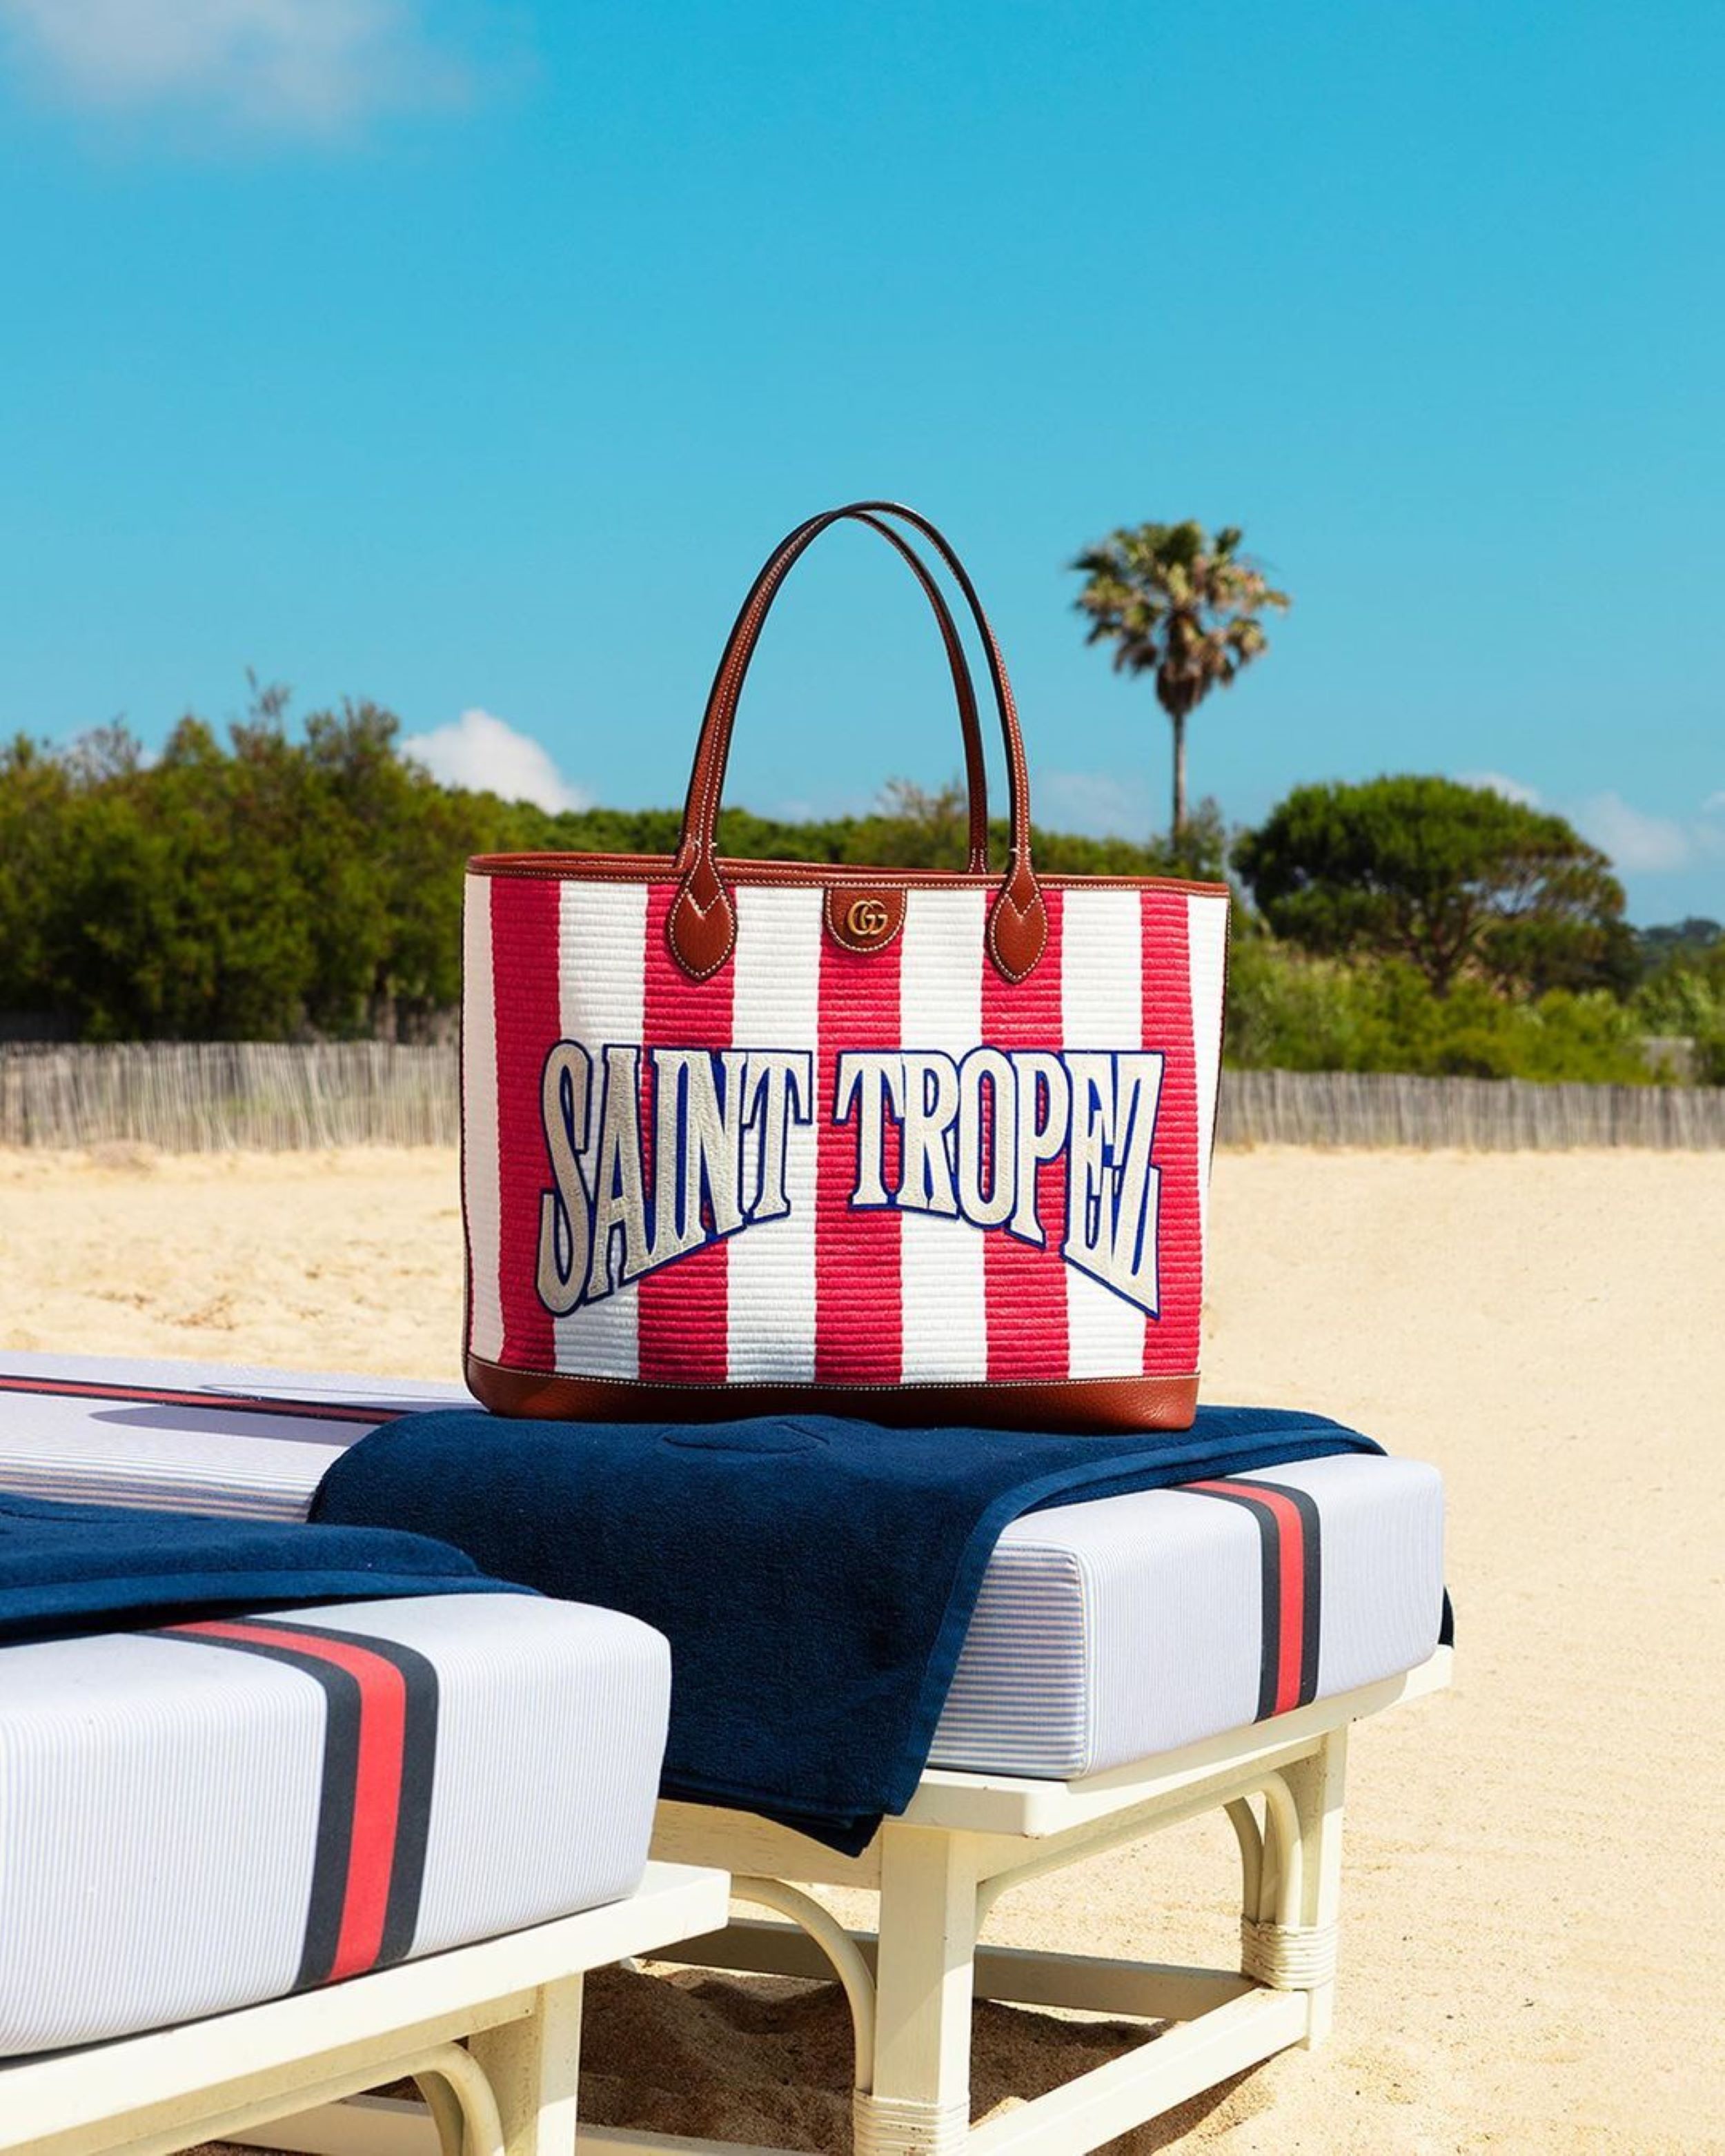 The New High Fashion Beach Clubs of Pampelonne 2023 - St Tropez